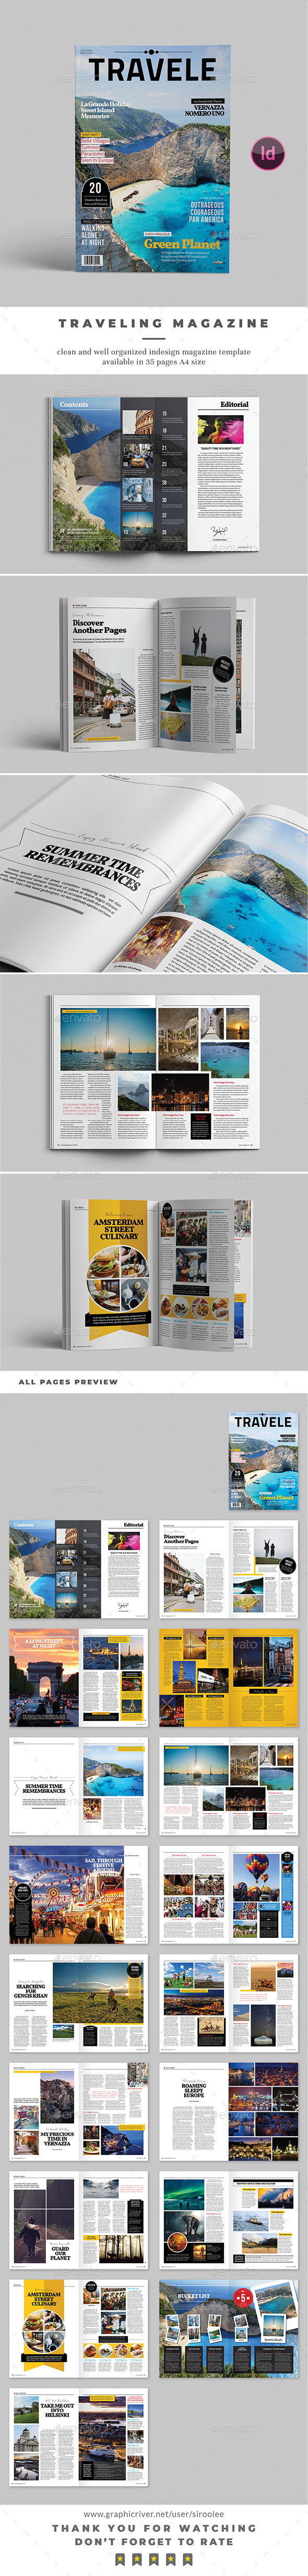 Graphicriver Travel Magazine 17651562 Download Free